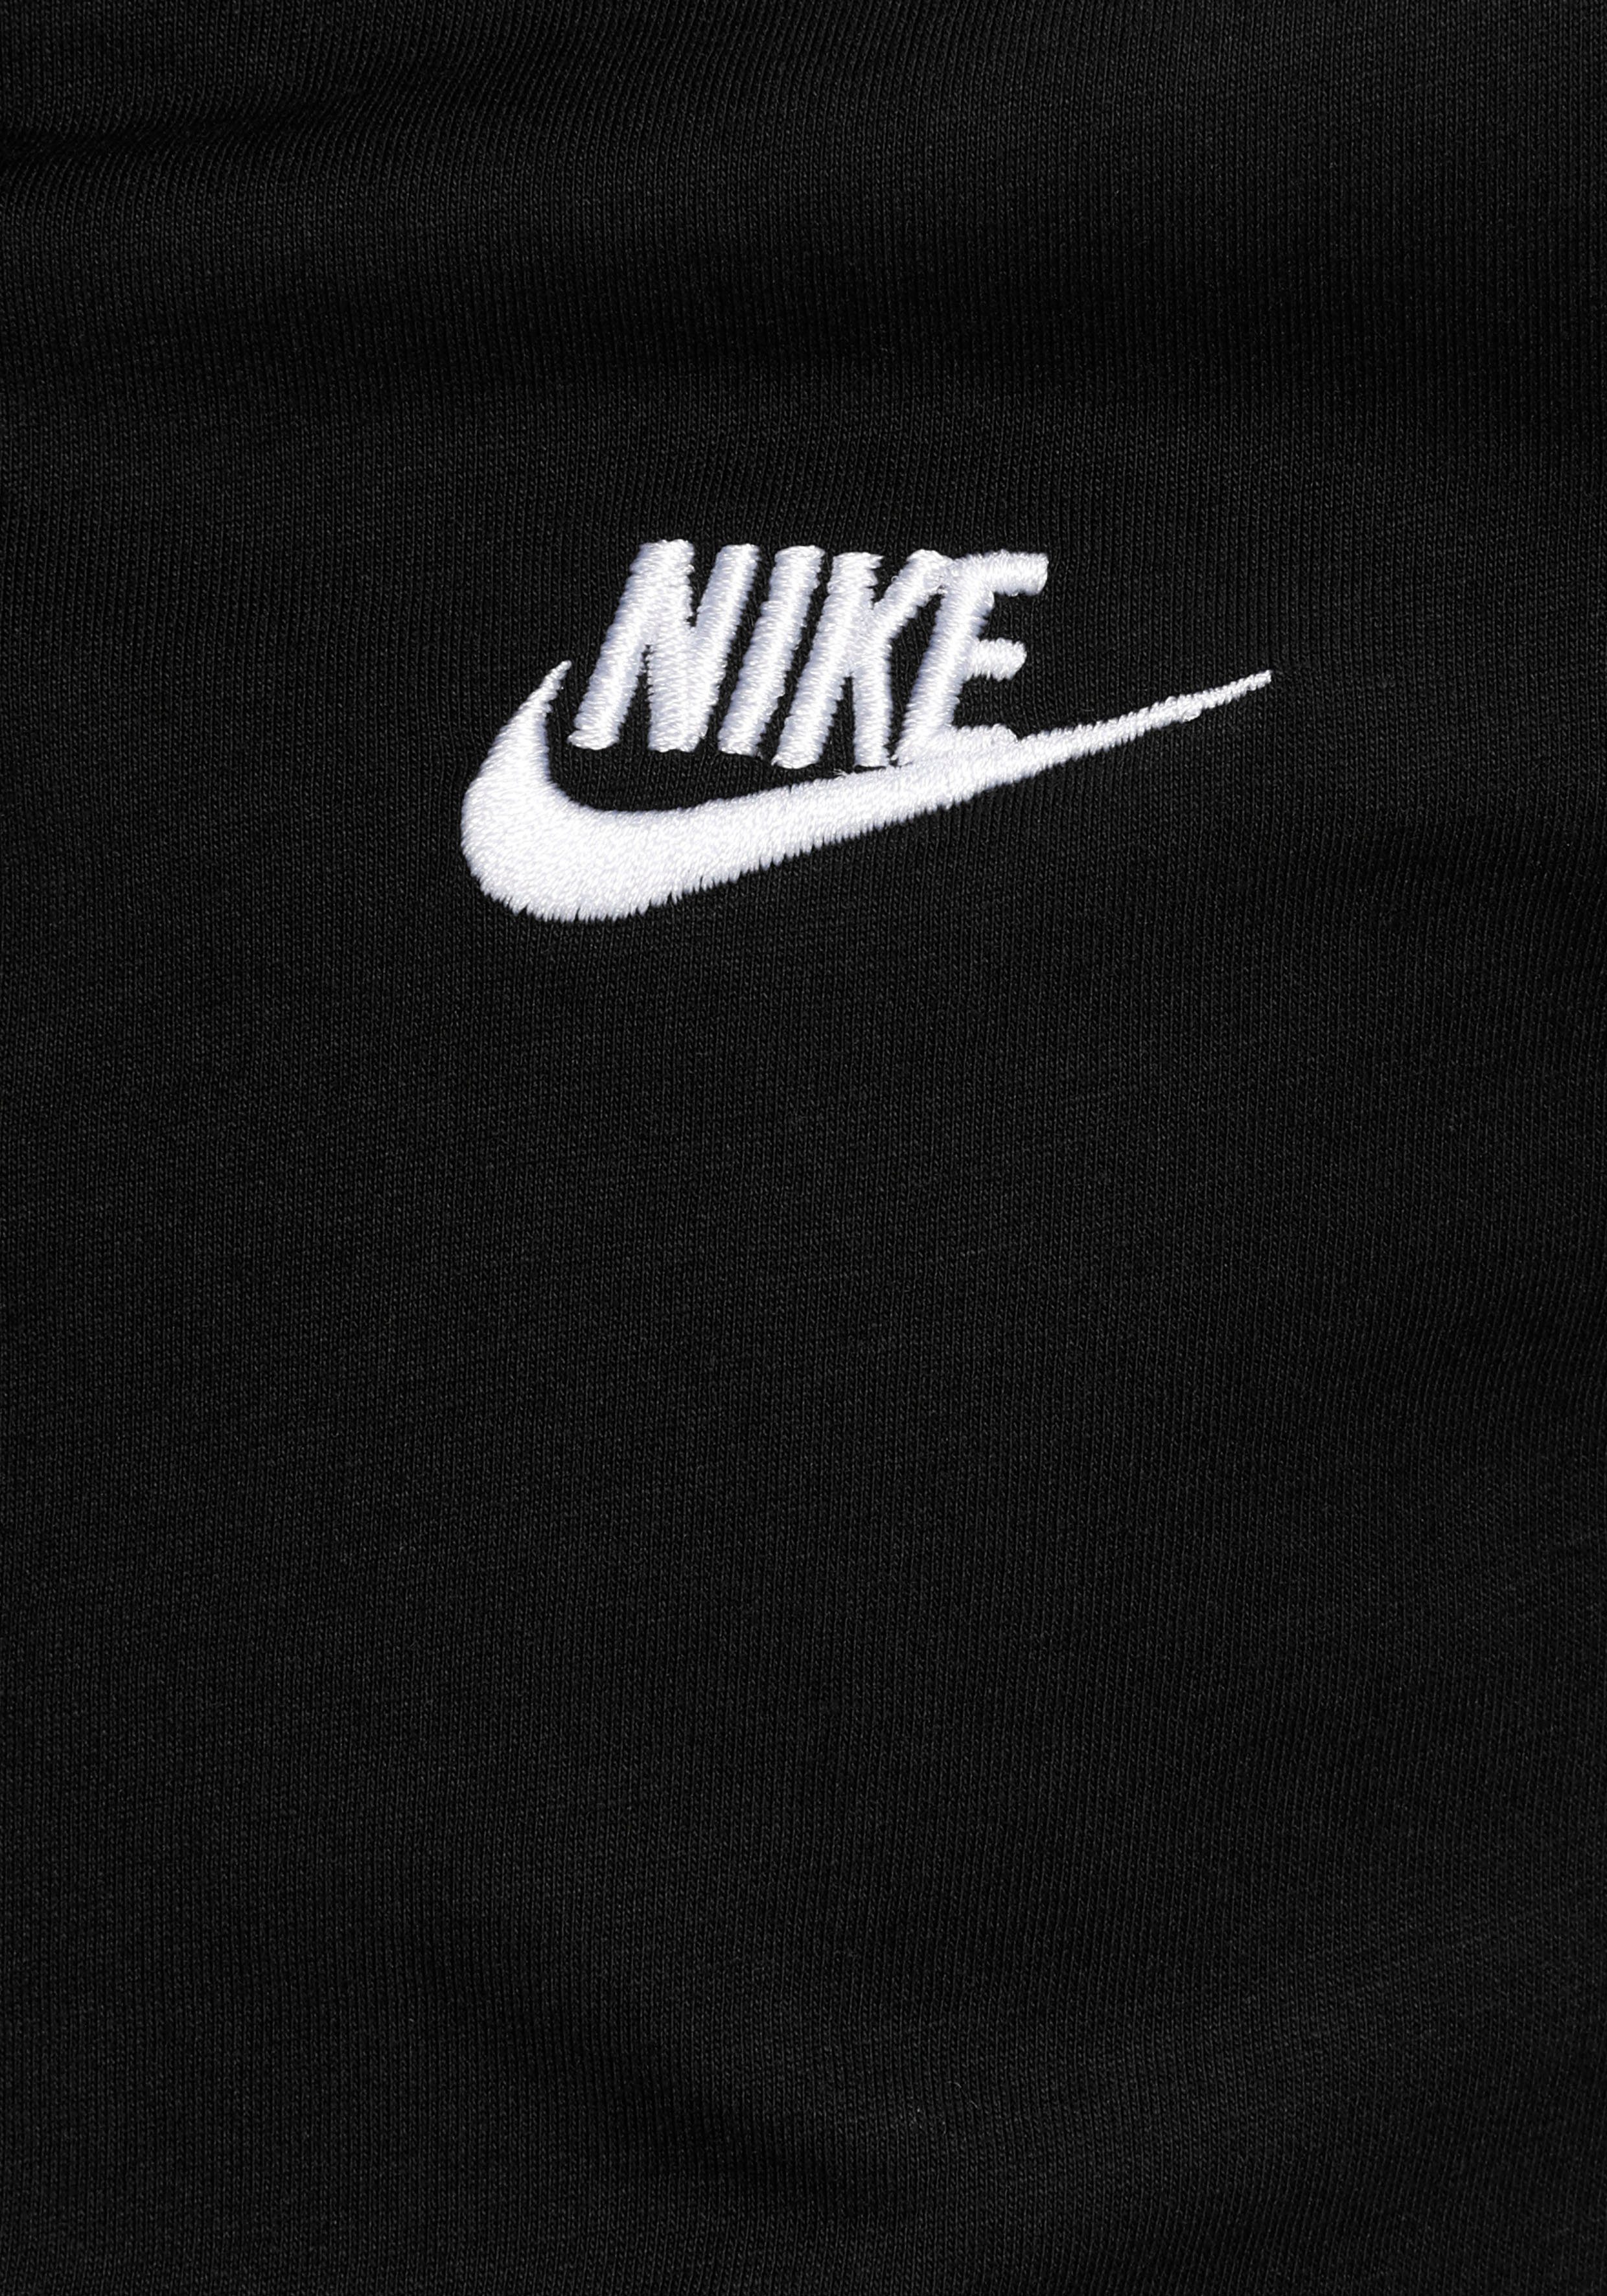 Nike Sportswear Langarmshirt T-SHIRT LONG-SLEEVE schwarz BIG (BOYS) KIDS'